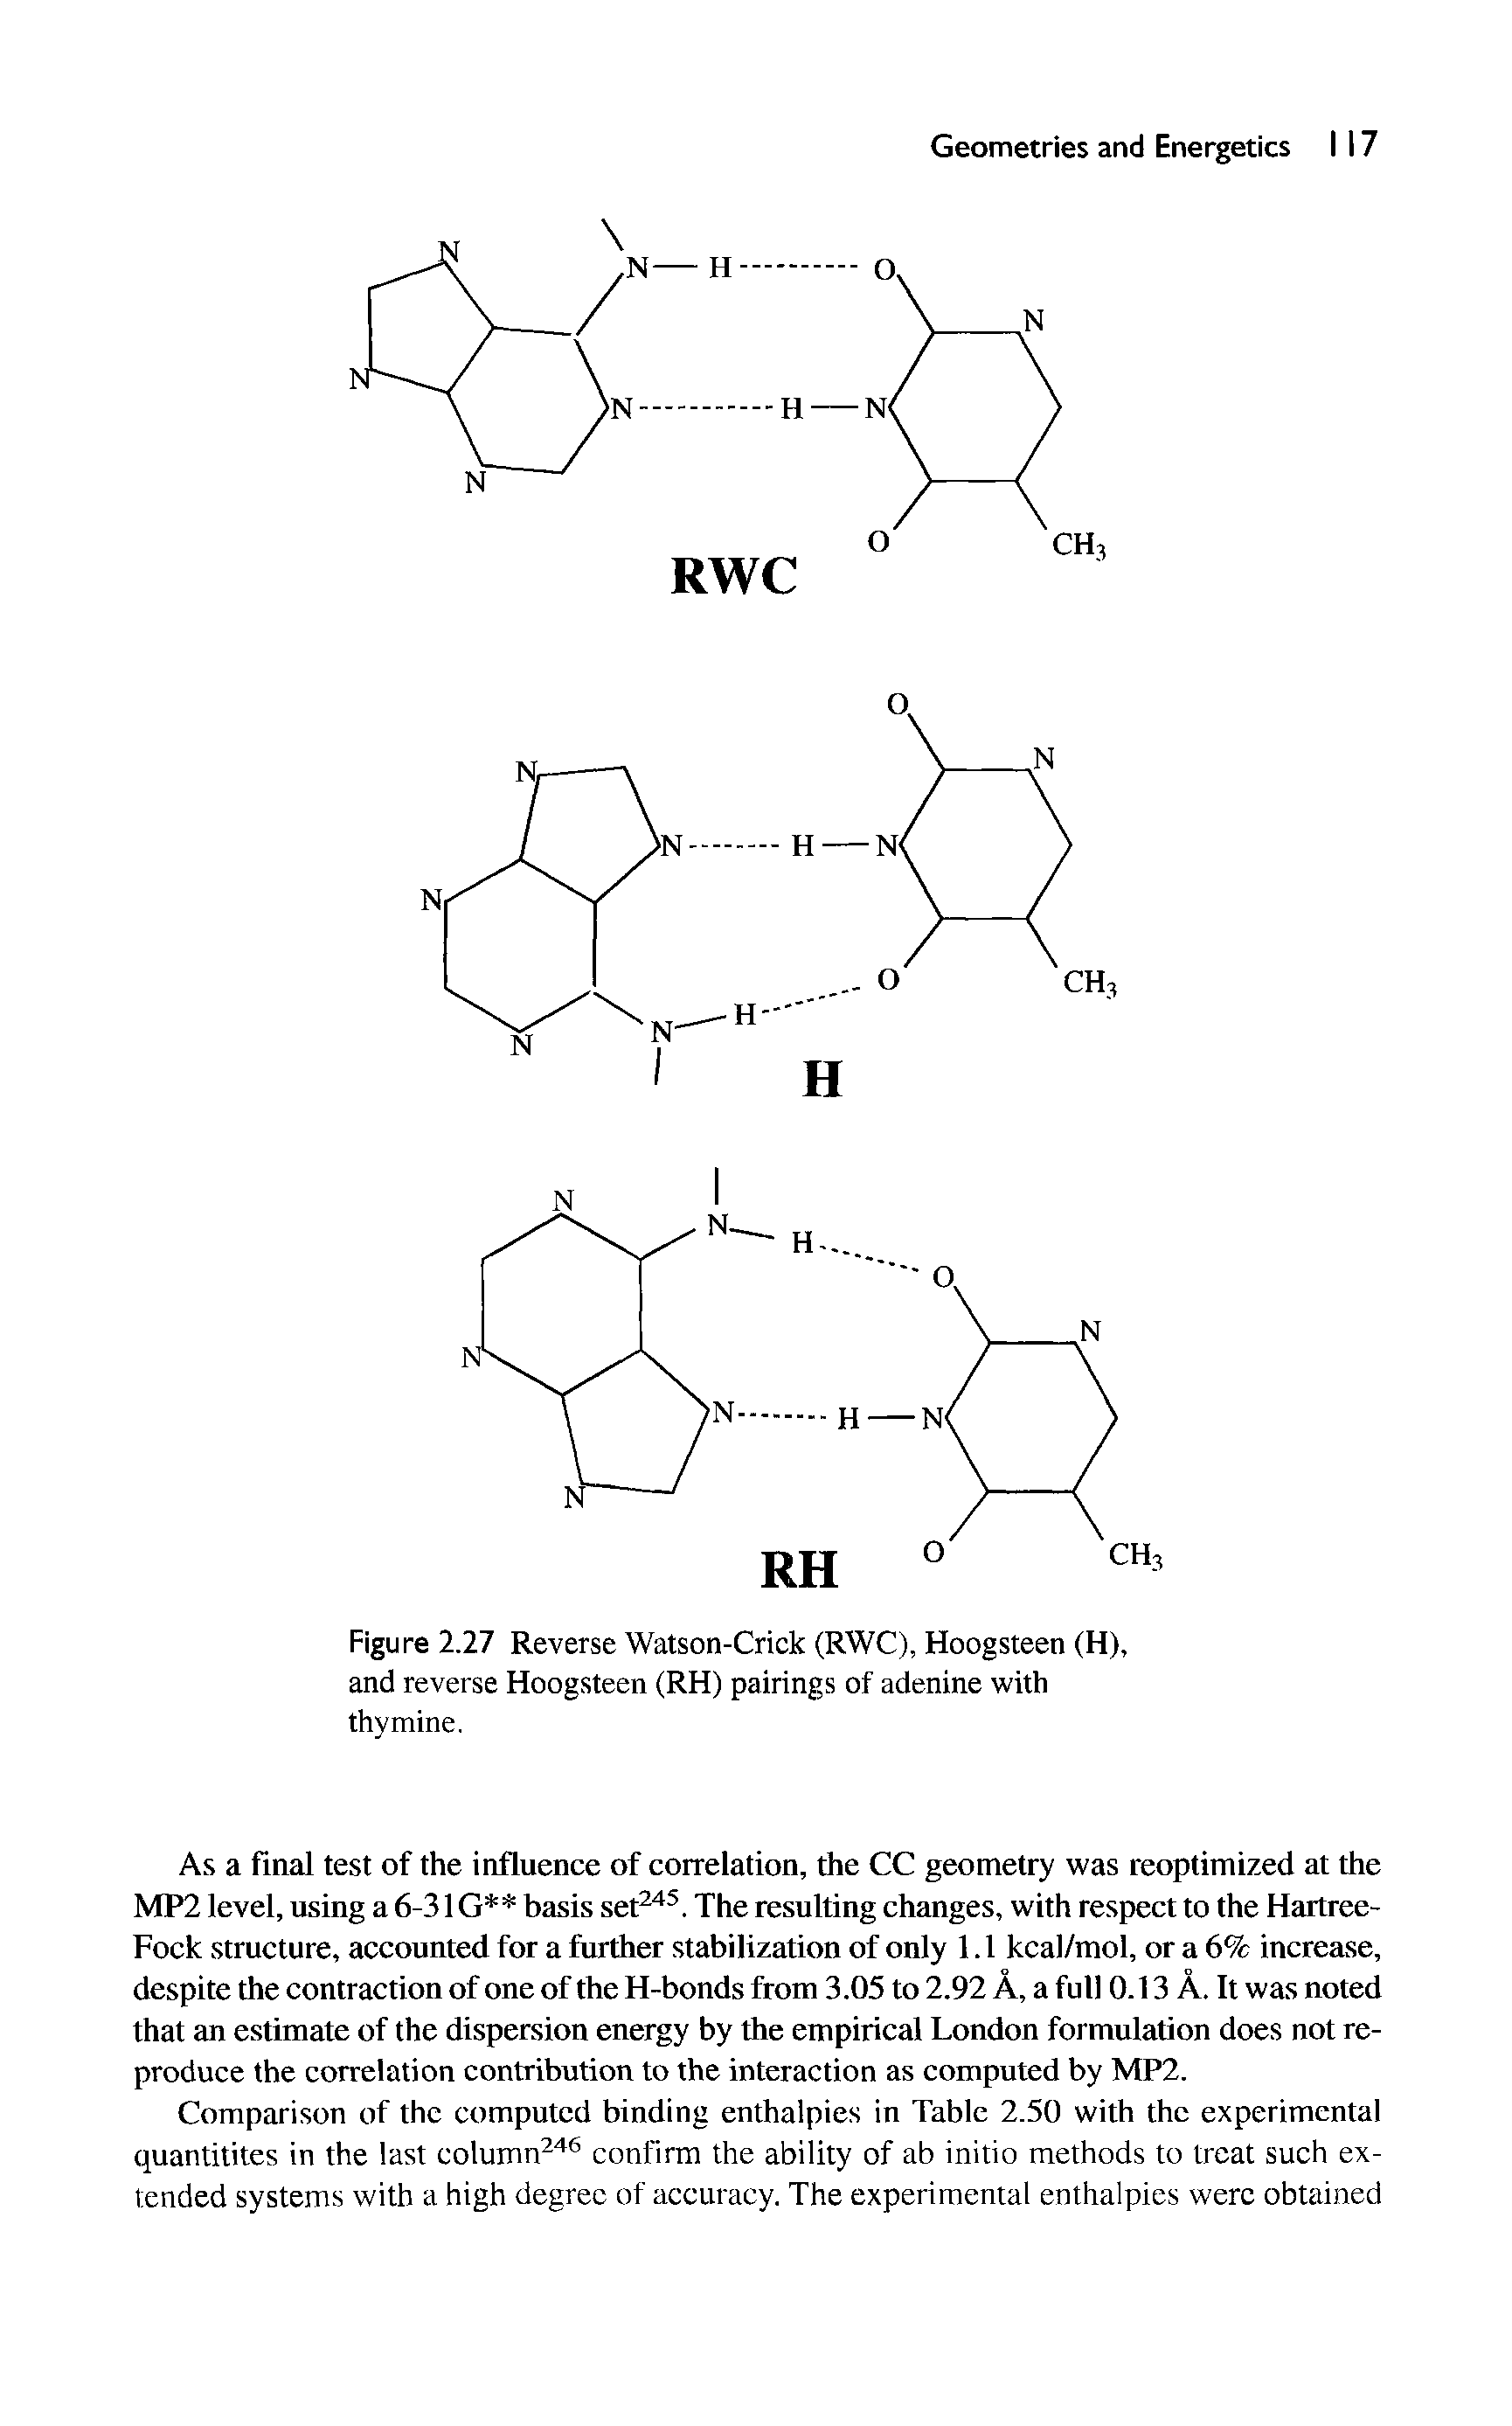 Figure 2.27 Reverse Watson-Crick (RWC), Hoogsteen (H), and reverse Hoogsteen (RH) pairings of adenine with thymine.